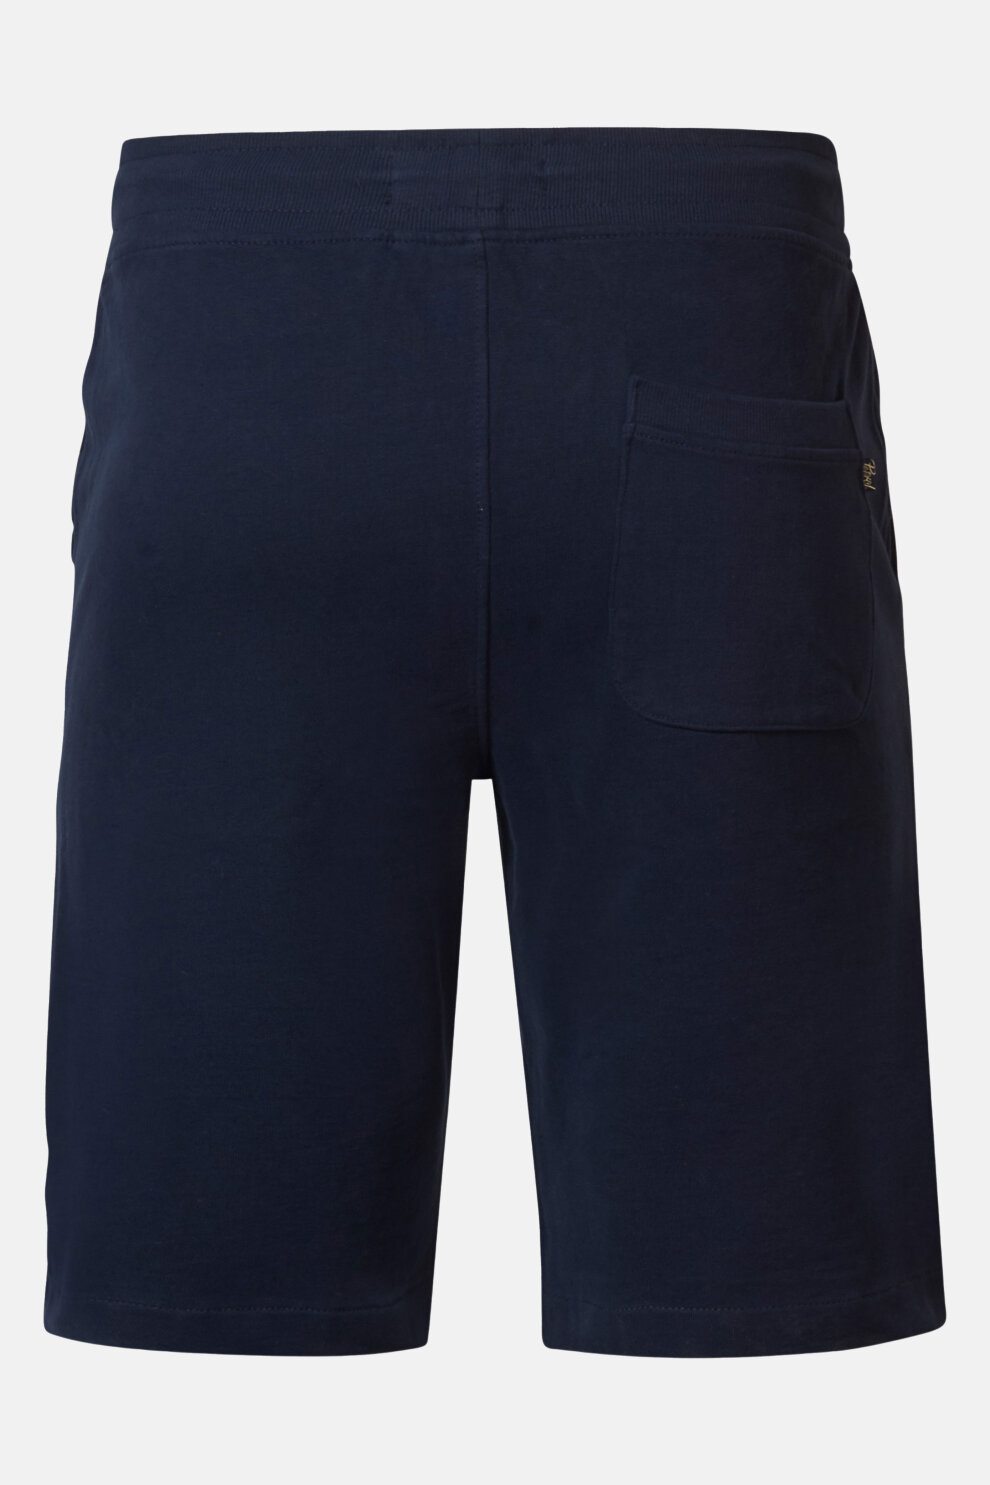 MUŠKARCI - Kratke hlače - Petrol bermude - Plava